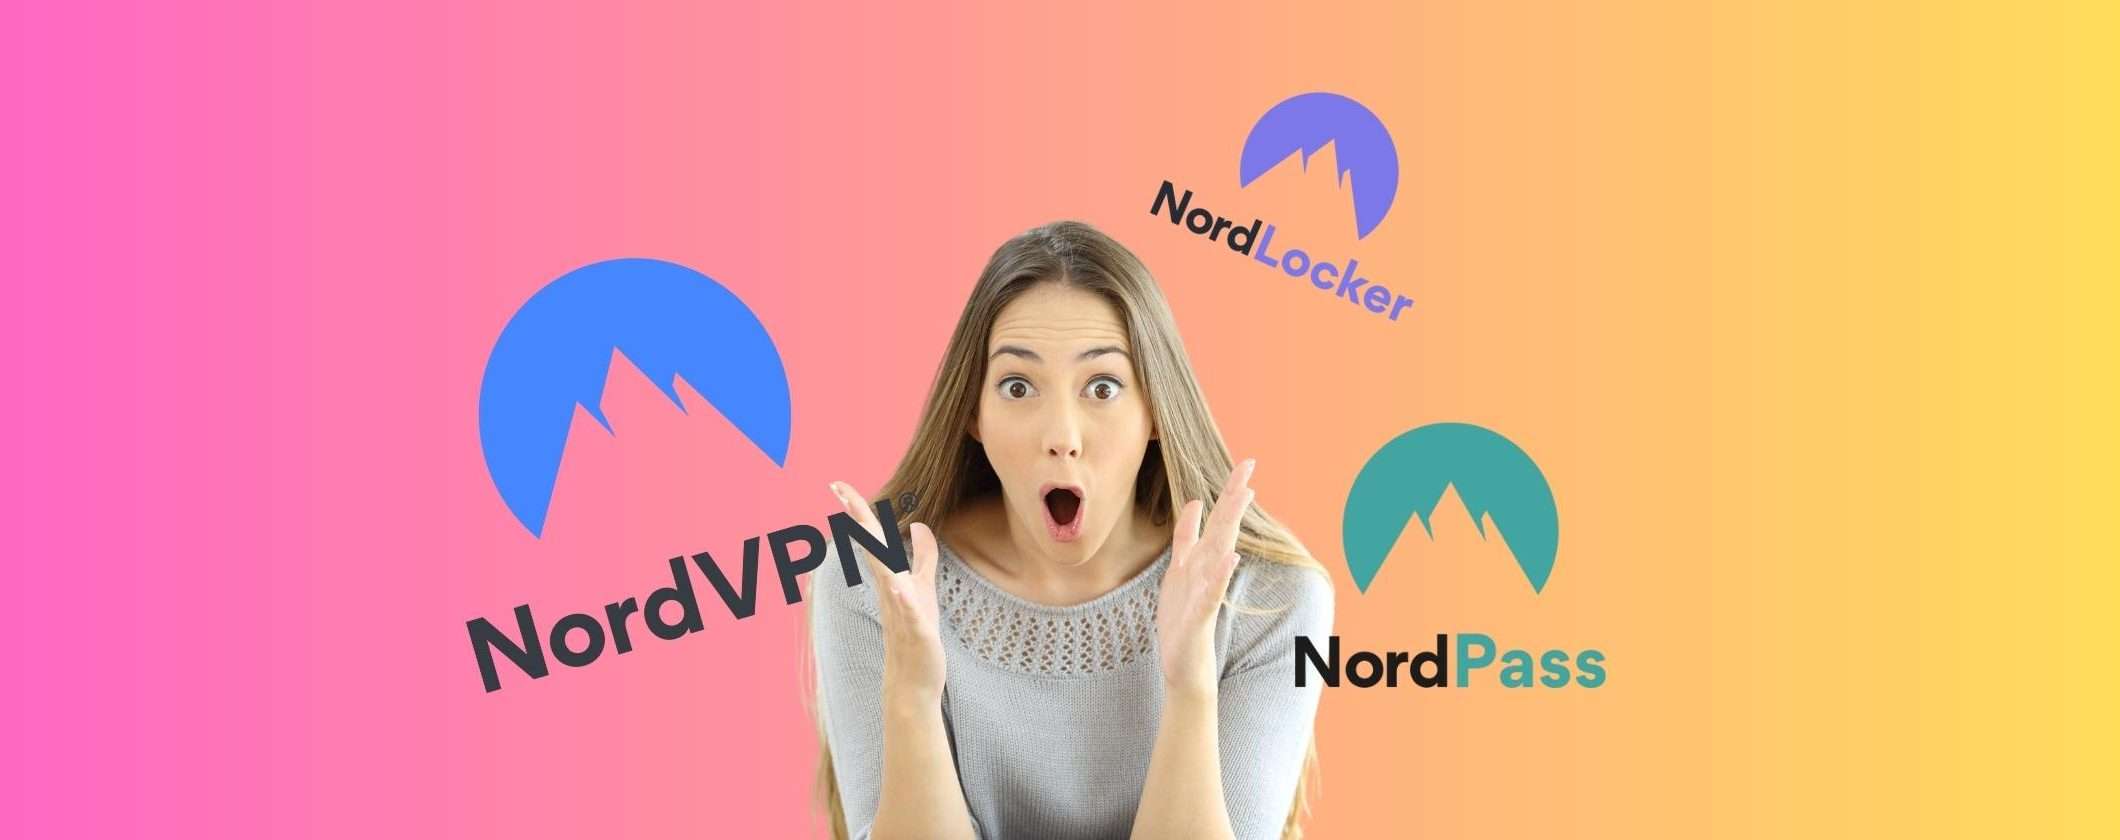 NordVPN: VPN, Password Manager e Cloud a un prezzo ESCLUSIVO